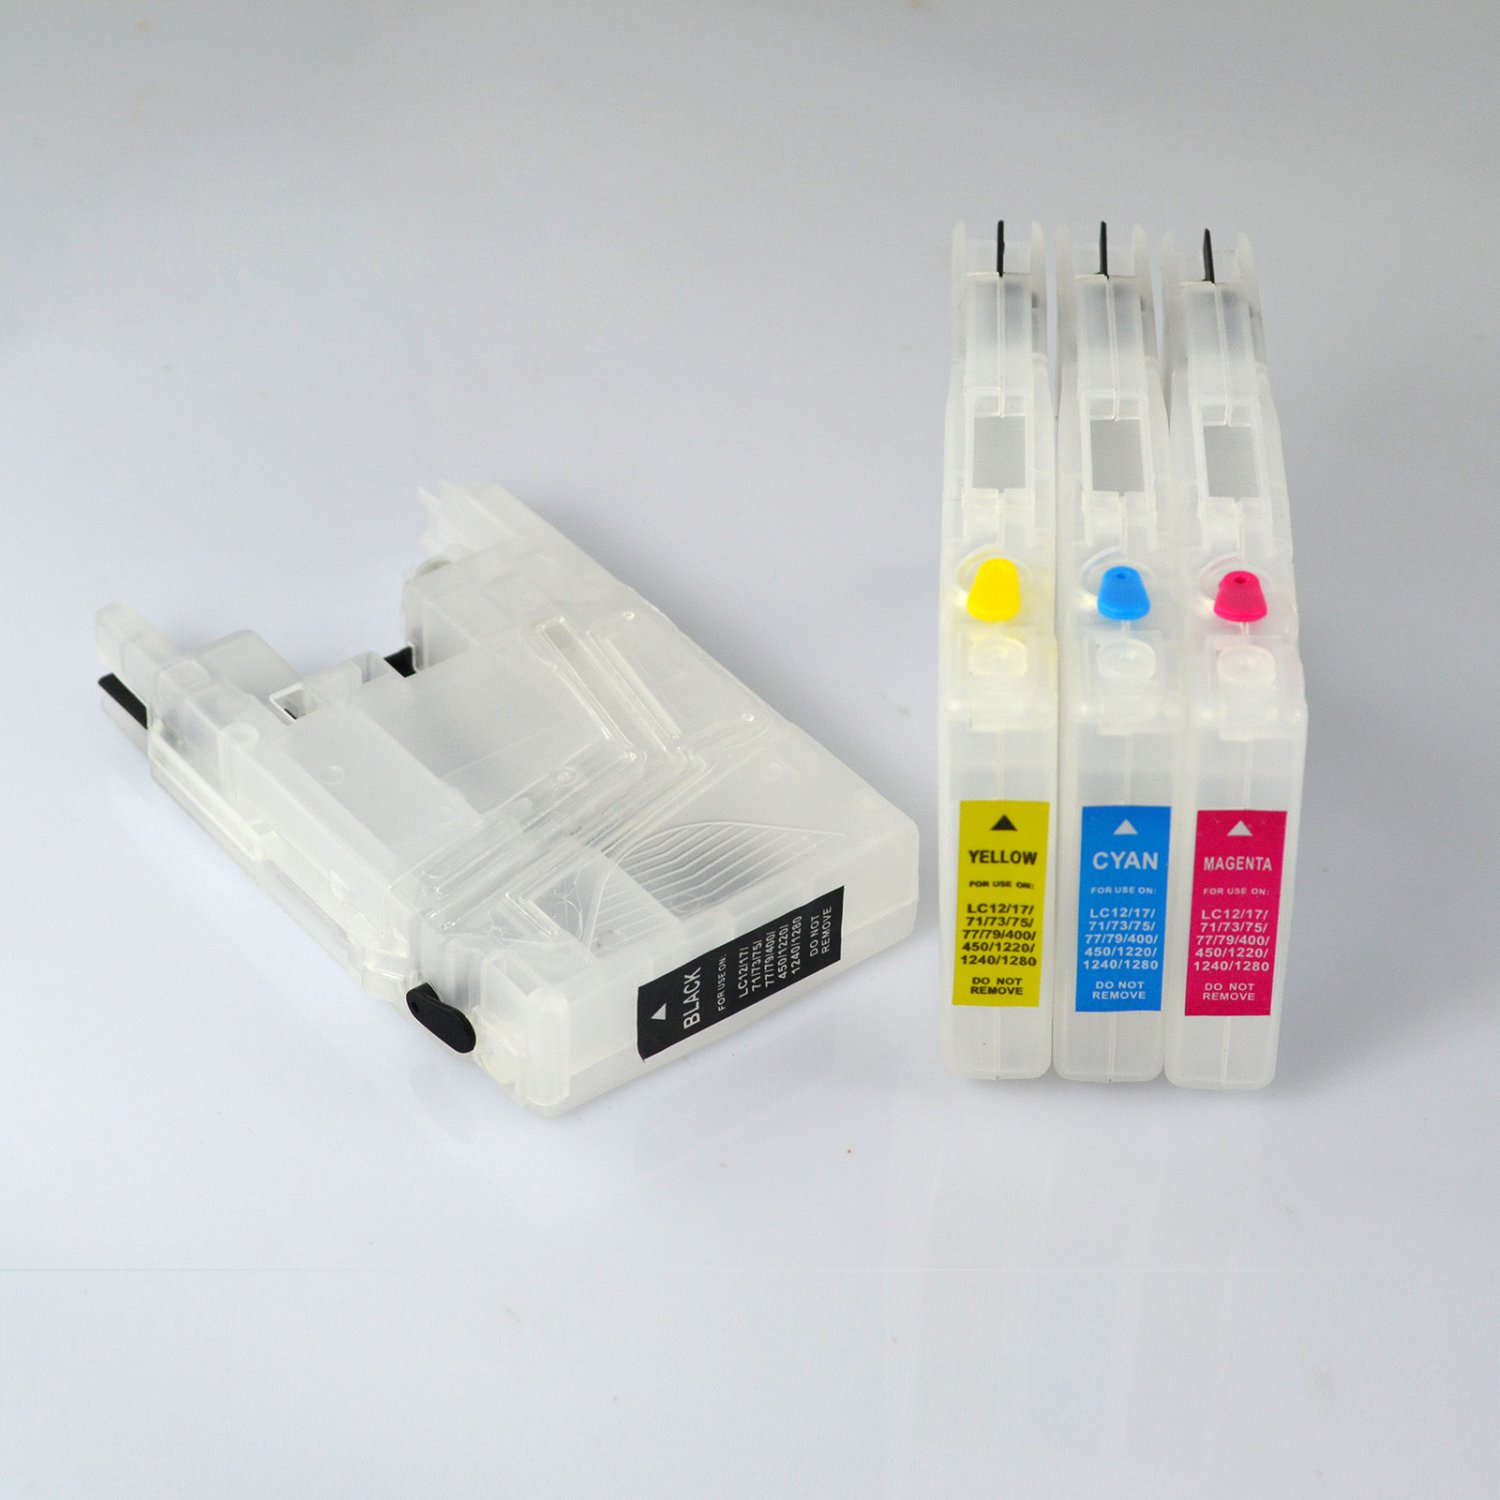 Empty Refillable Ink Cartridge Kit For Brother Mfc J435w Mfc J625dw J430w J280w 8572